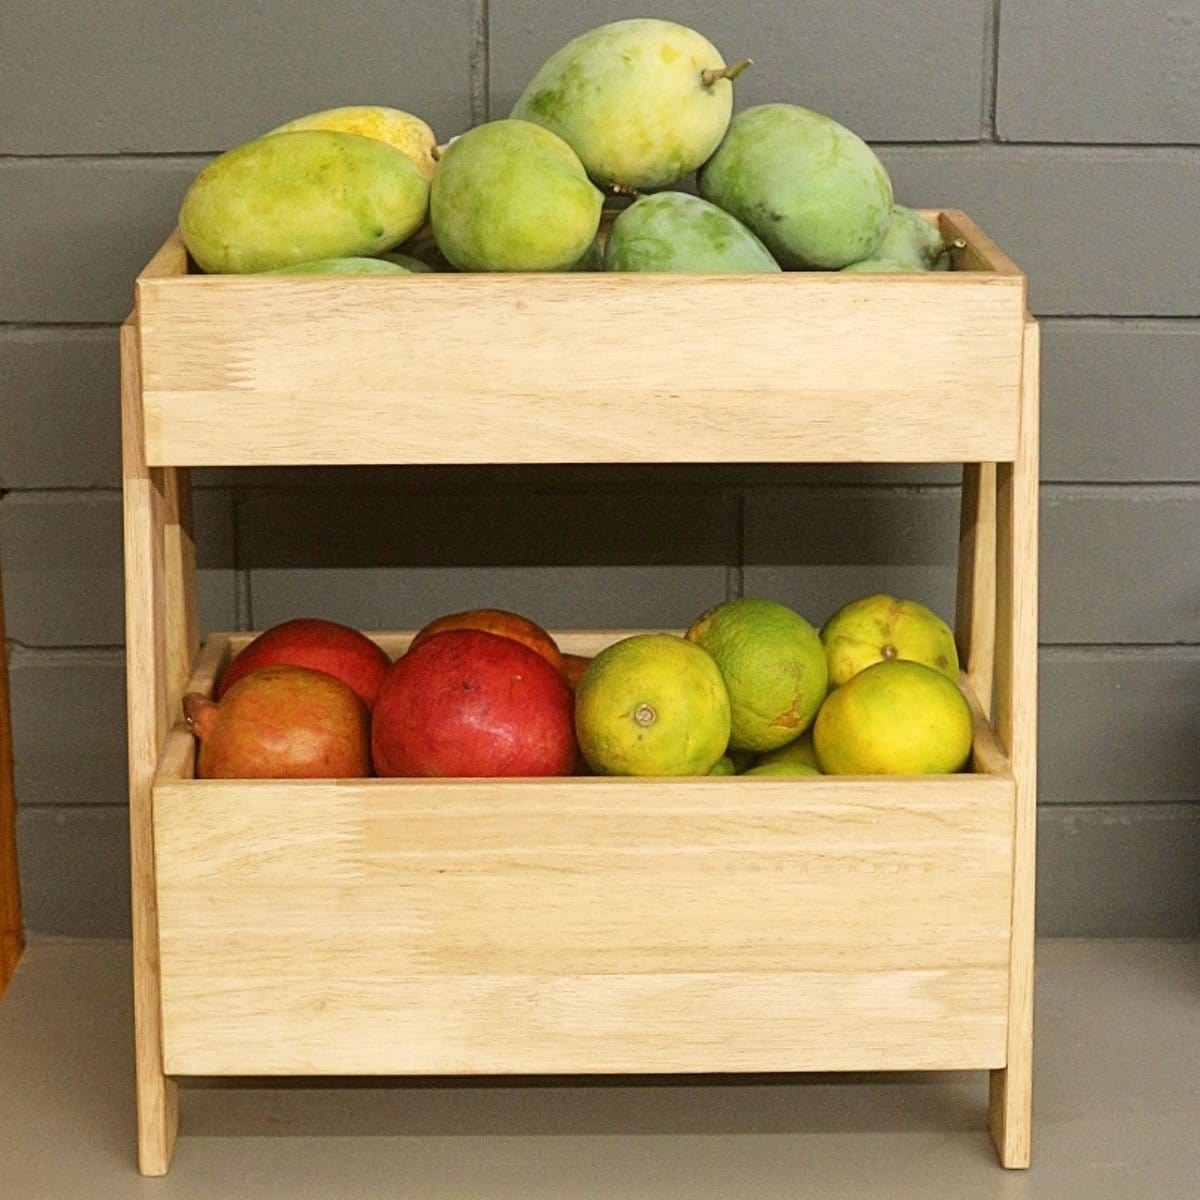 Barish Veg & Fruit Basket 2 Tier Best Home Decor Handcrafted